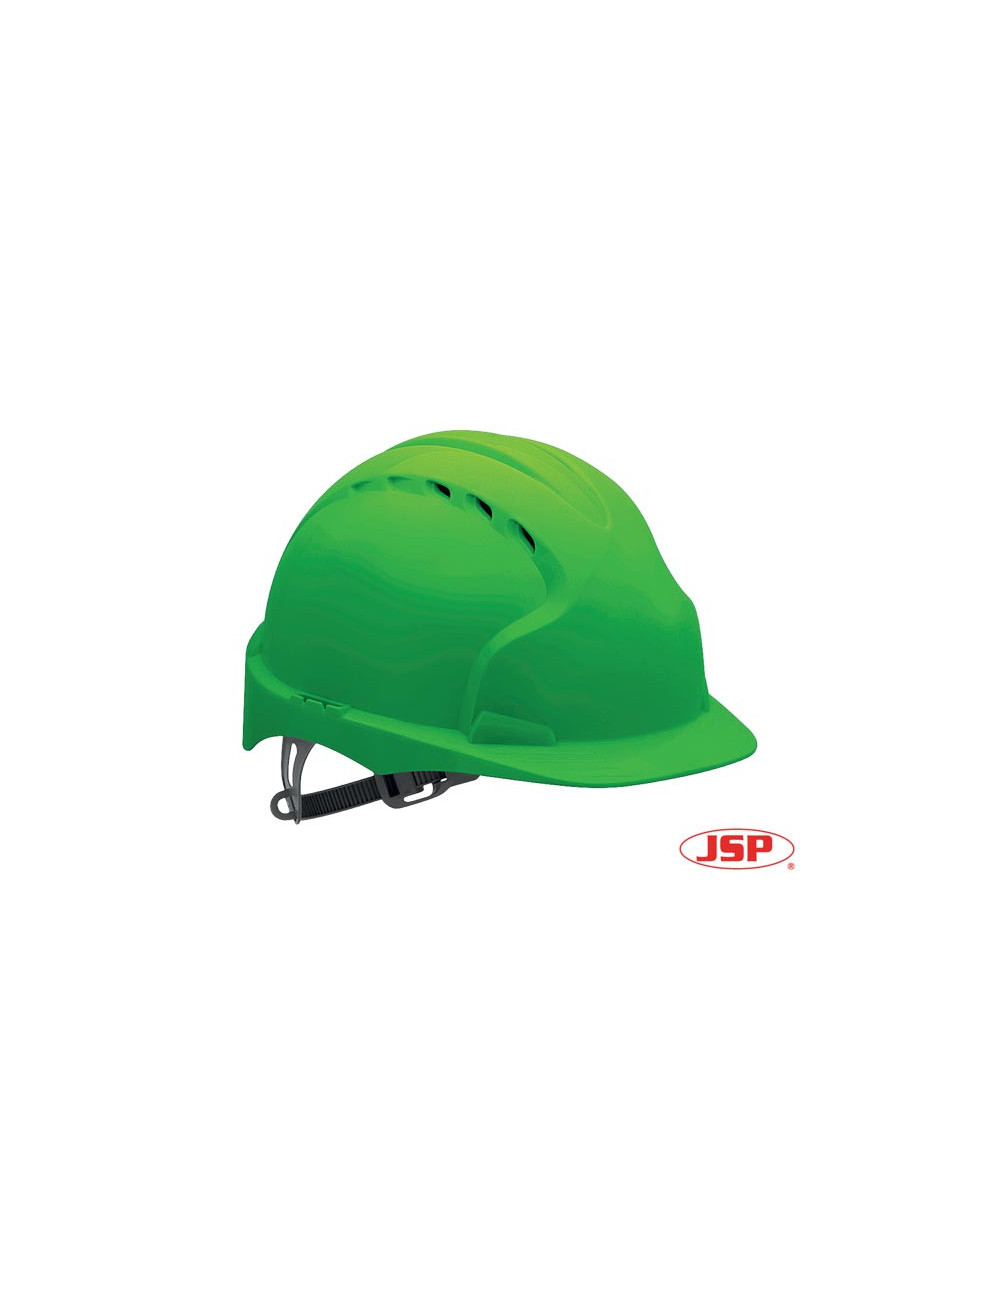 Protective helmet kas-evo2 with green Jsp